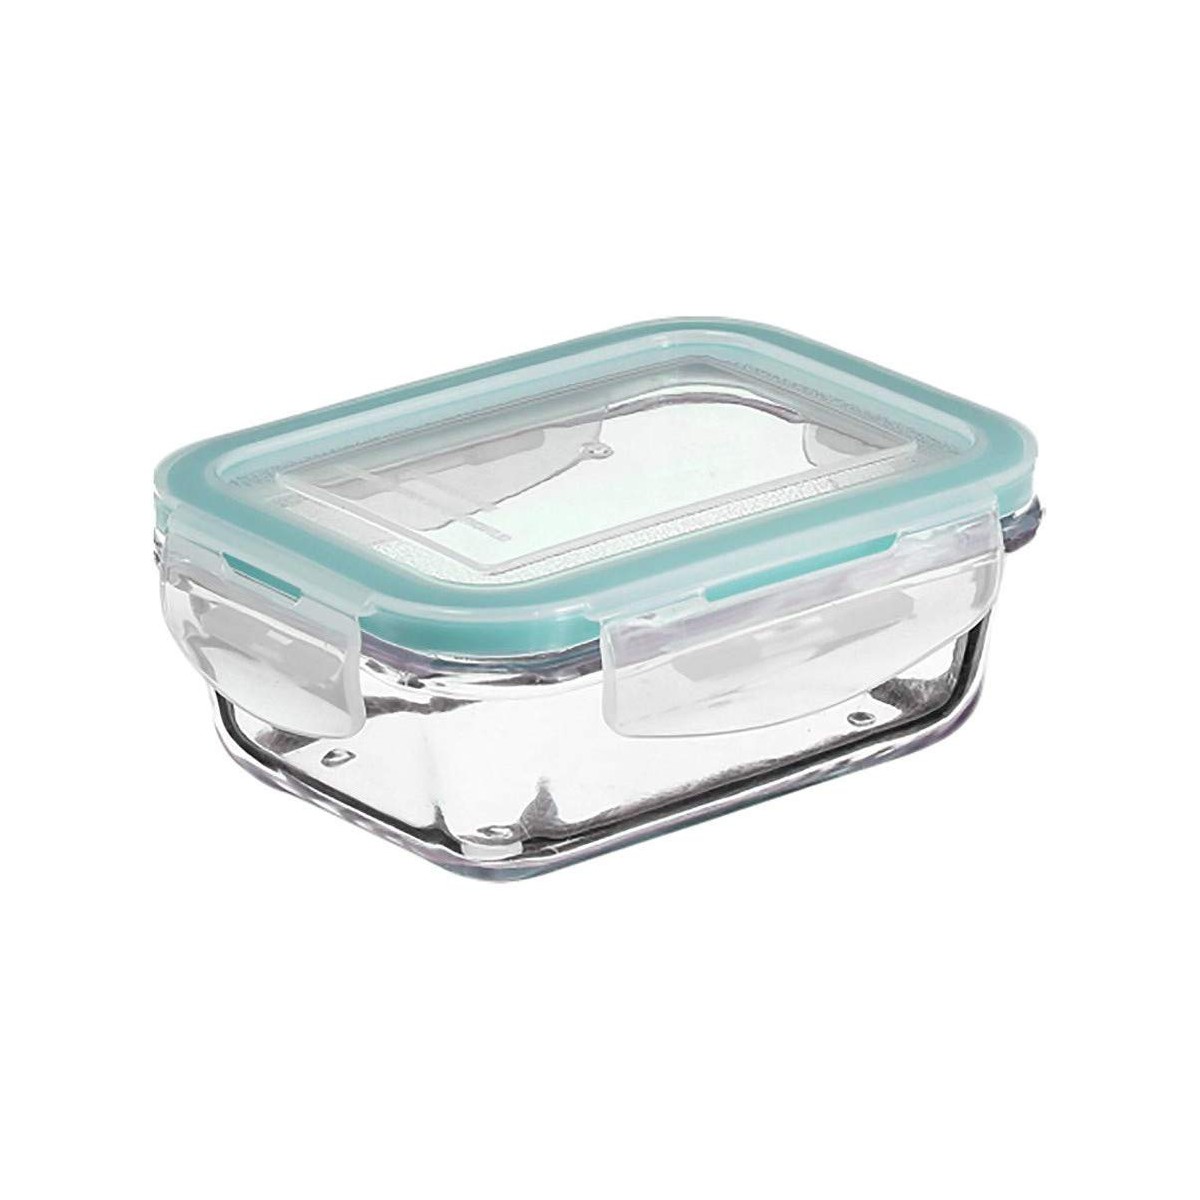 Lunch box 5five 16,3 x 11,5 x 5,5 cm Crystal 540 ml